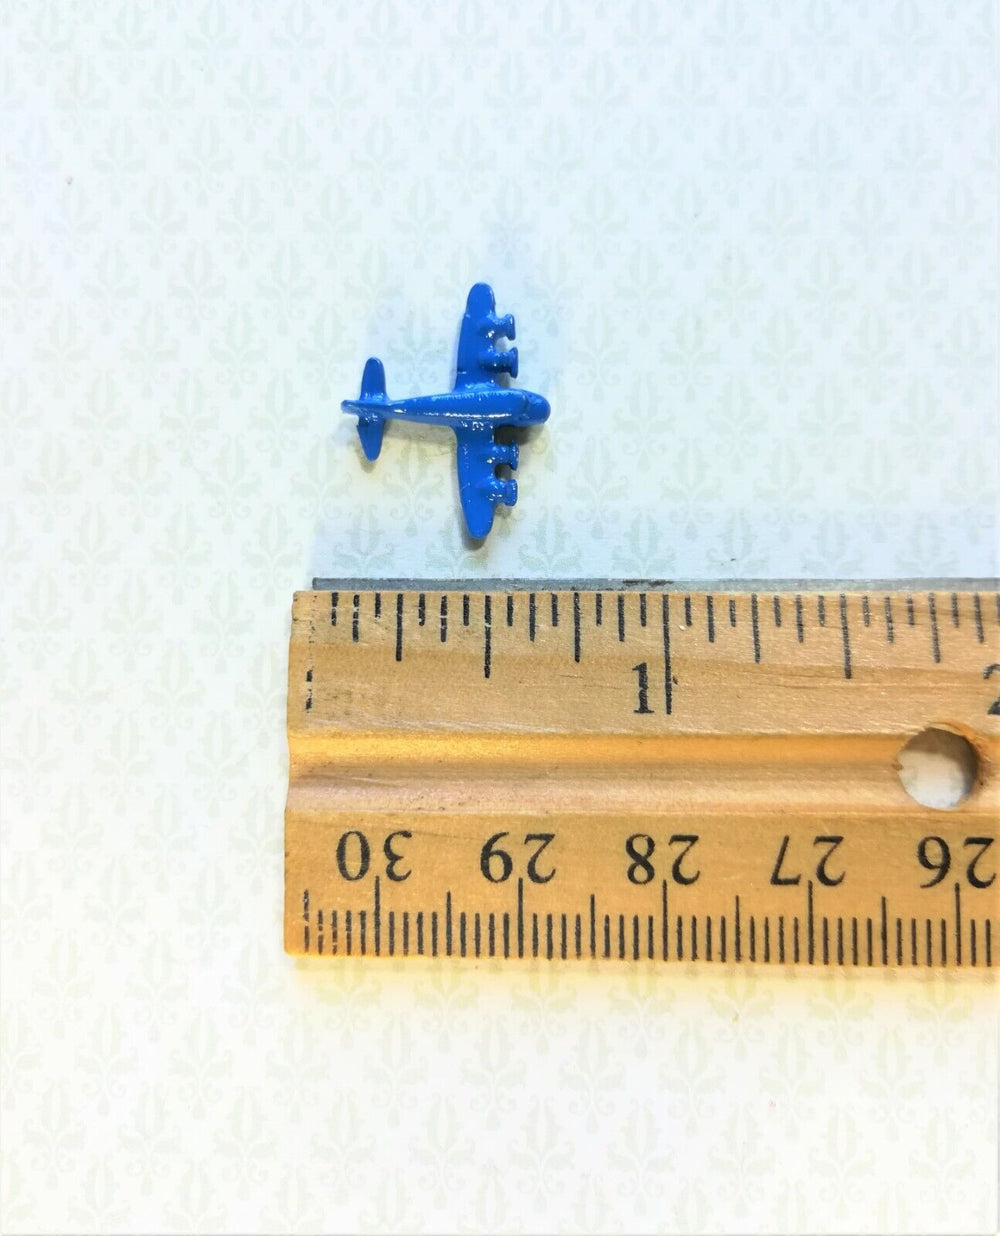 Dollhouse Miniature Airplane Toy Tiny Blue Painted Metal 1:12 Scale Plane - Miniature Crush